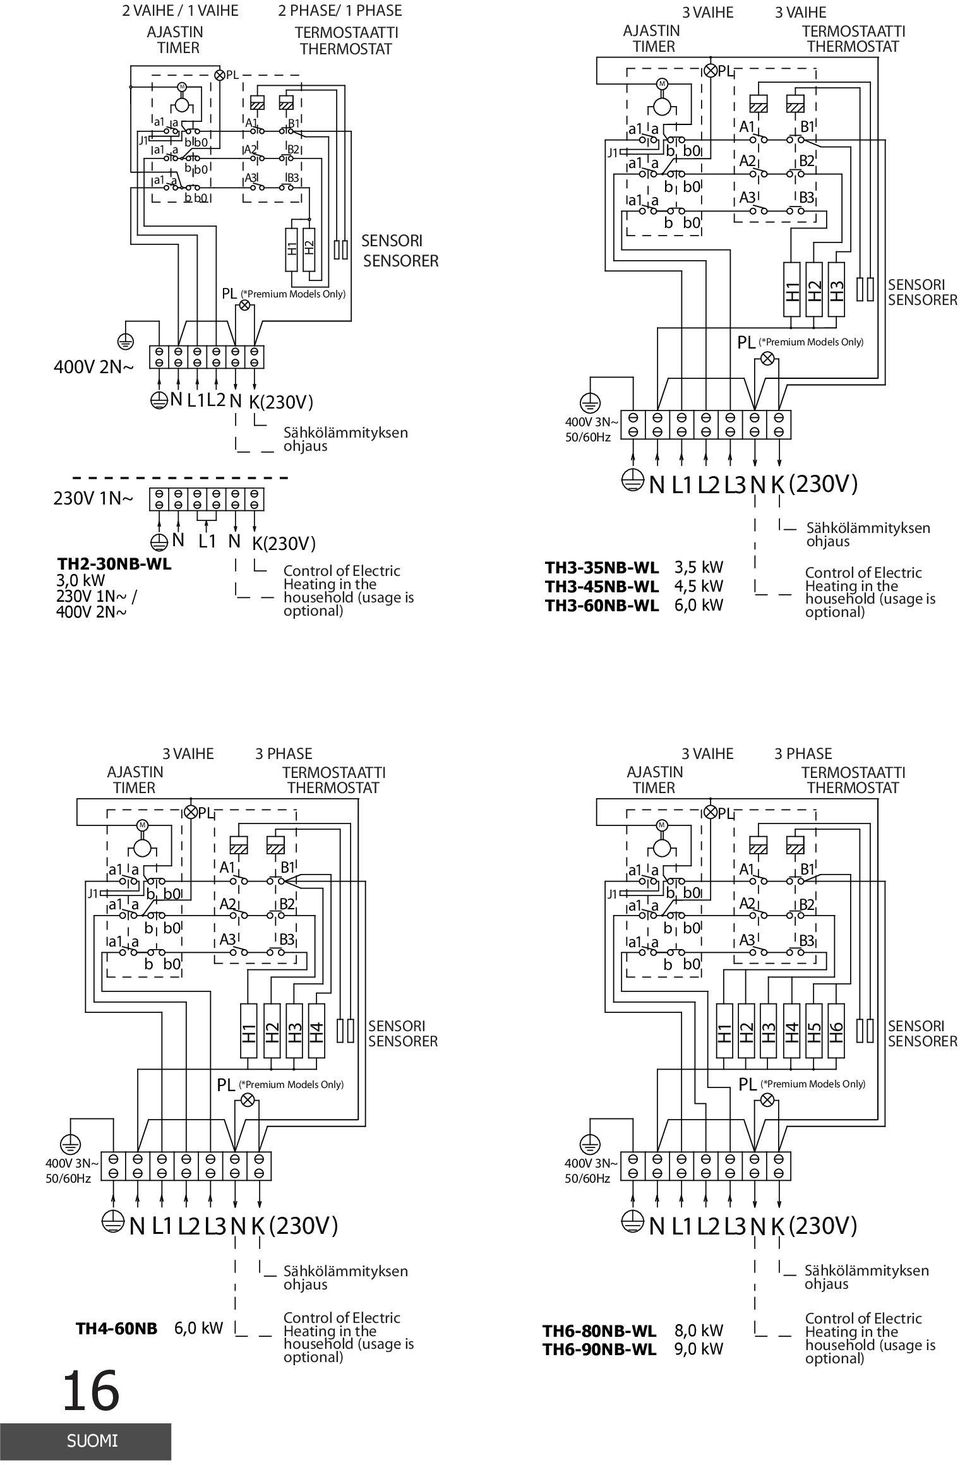 K(230) Control of Electric Heating in the household (usage is optional) 400 3~ 50/60Hz TH3-35B-L TH3-45B-L TH3-60B-L L1 L2 L3 K (230) 3,5 k 4,5 k 6,0 k PL (*Premium Models Only) Sähkölämmityksen